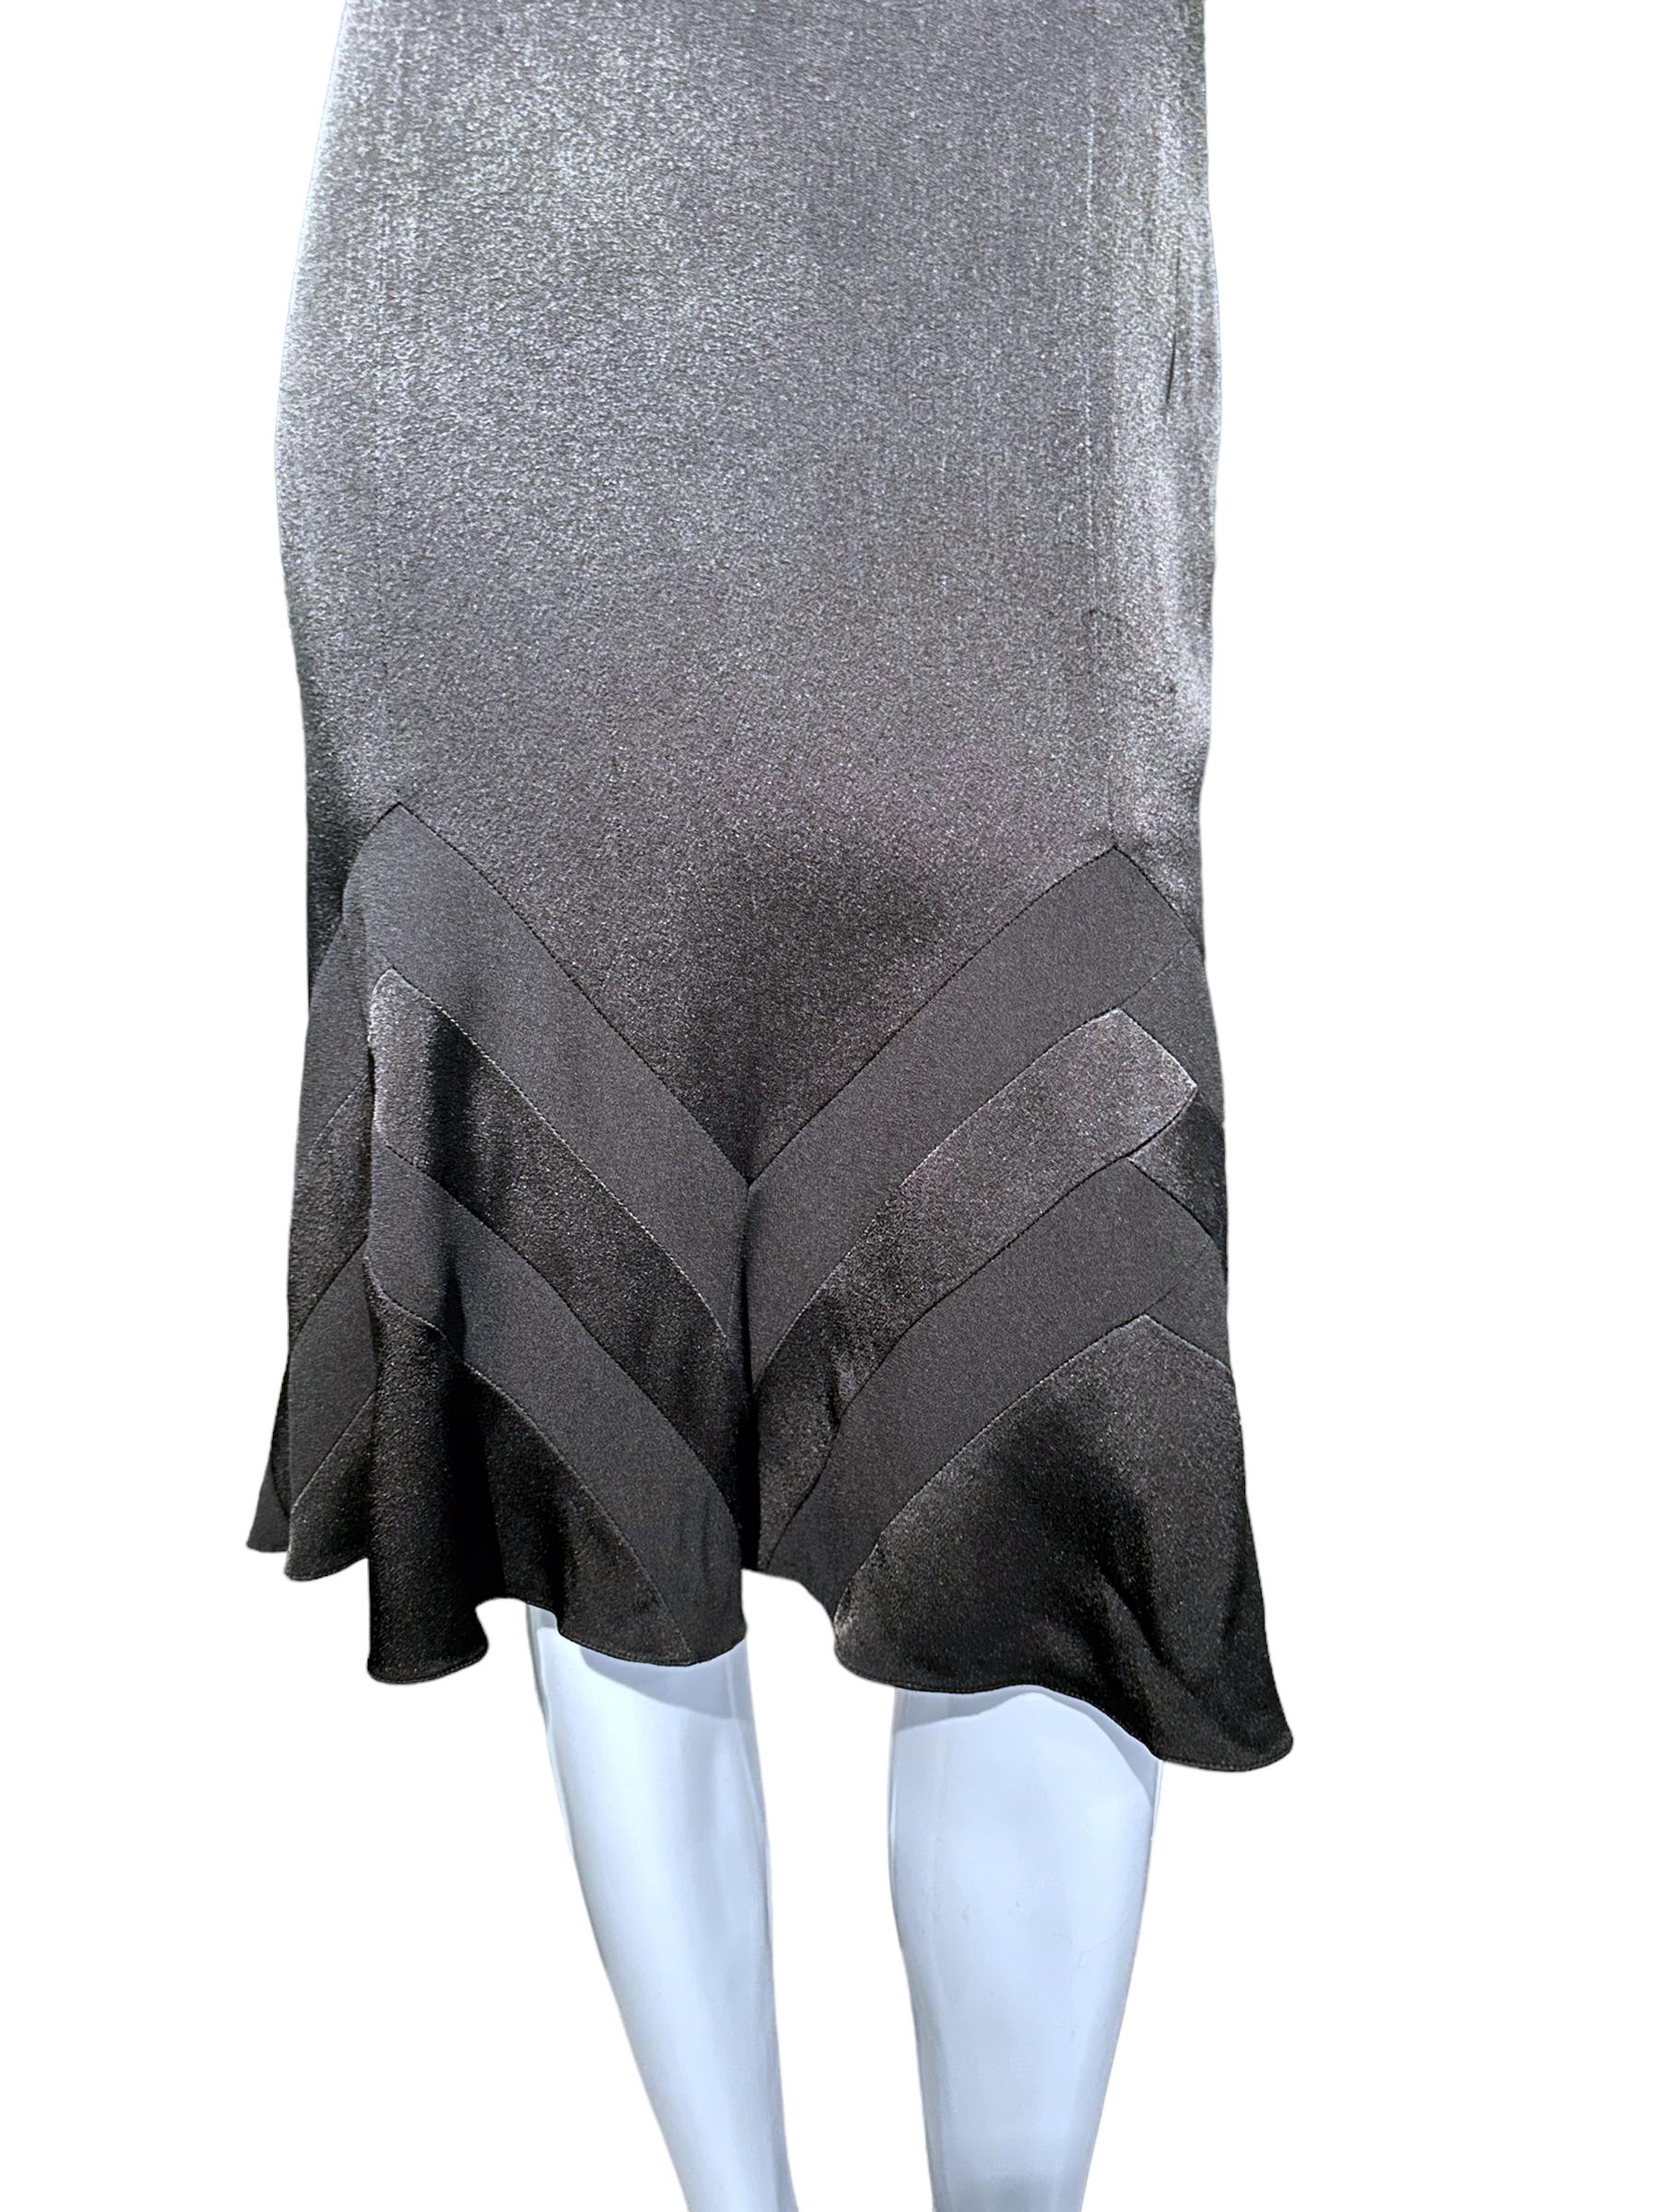 Women's Christian Dior By John Galliano Fw 2004 Black Bias Cut Silk Slip Dress For Sale